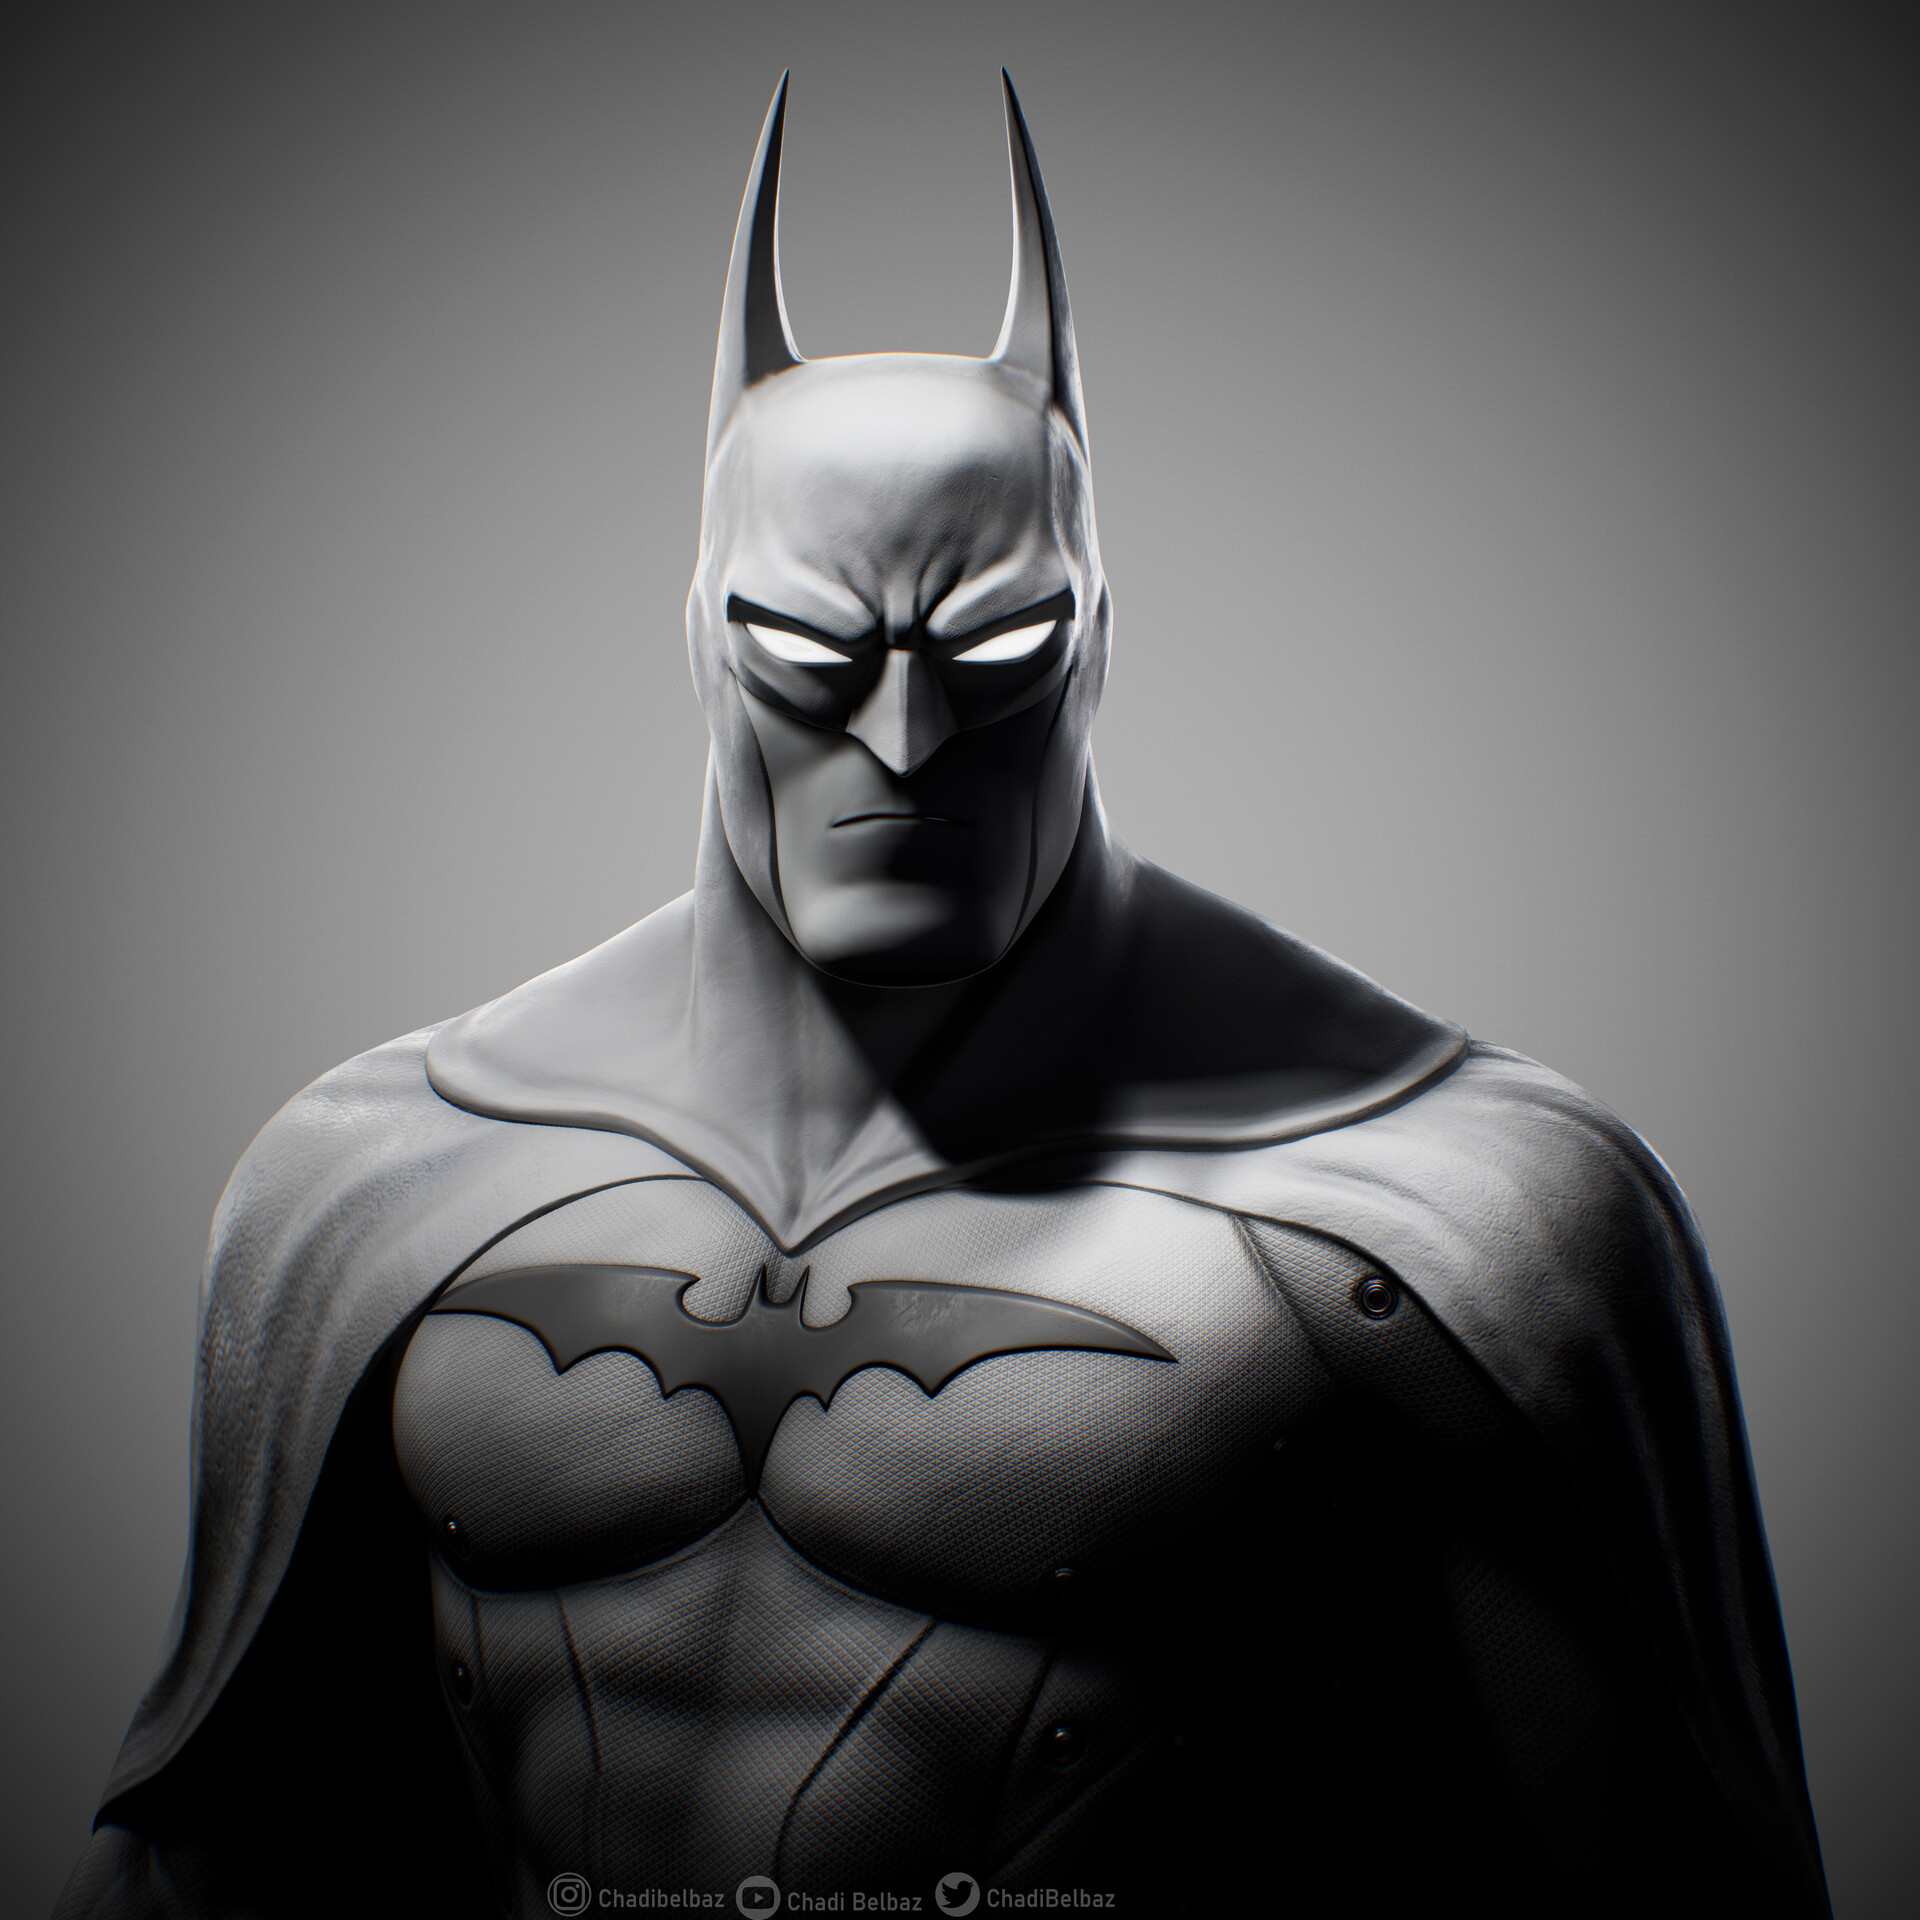 ArtStation - Batman Arkham City Stylized